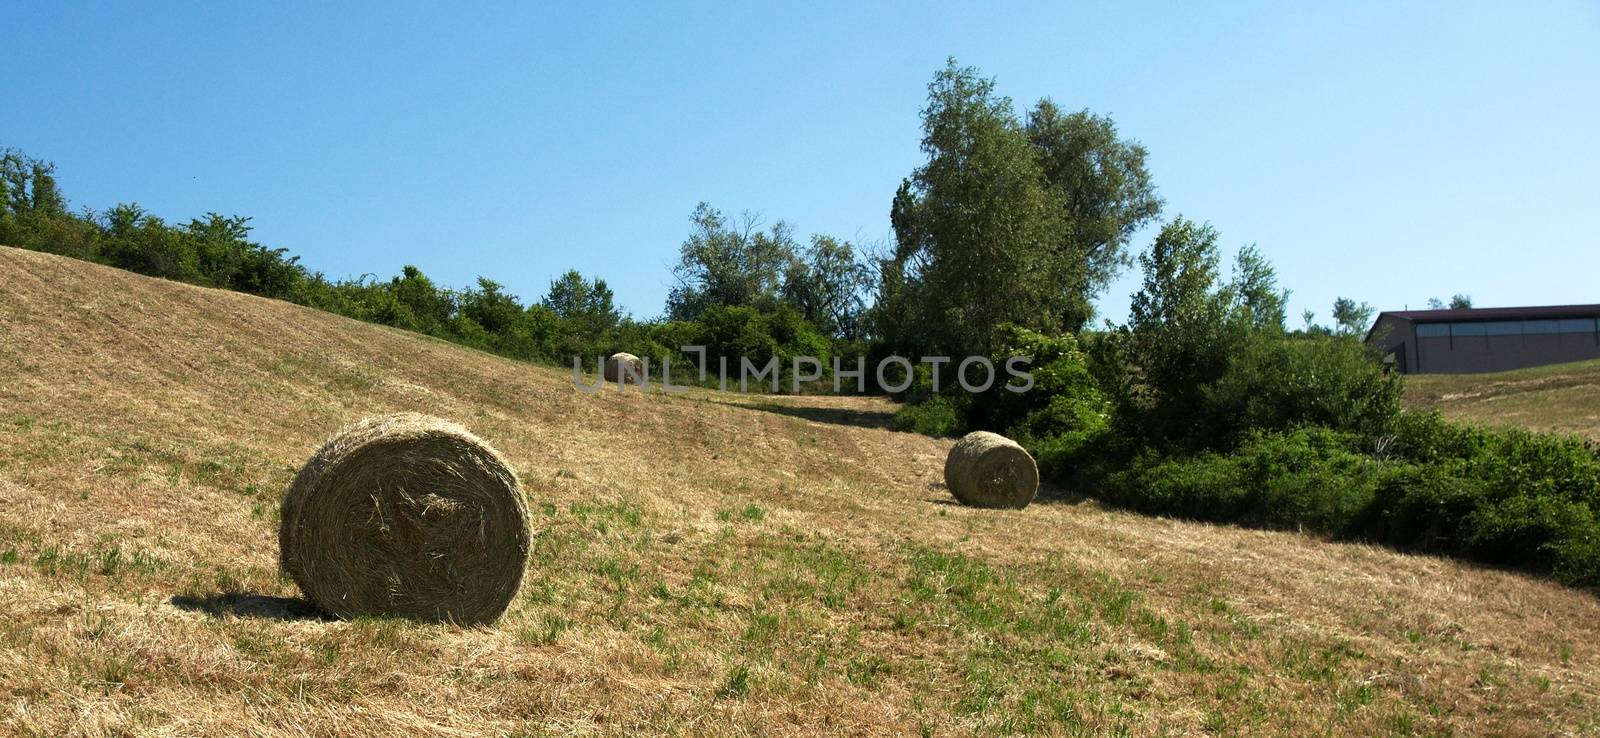 Rural views of Tuscany, Italy by javax